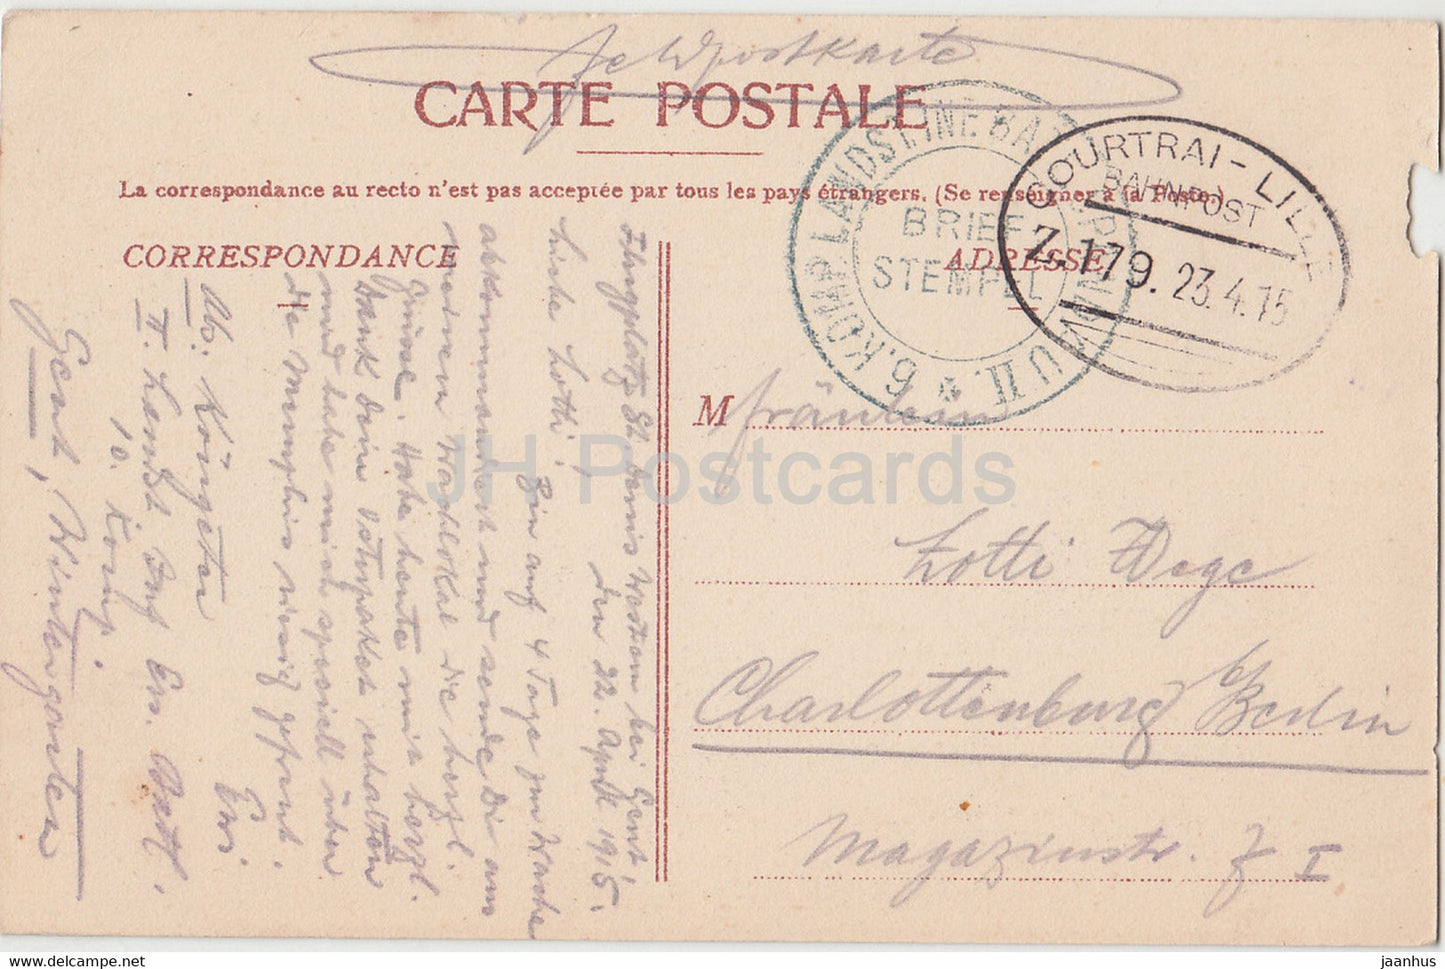 St Denis Westrem – La Gare – Bahnhof – Courtrai-Lille – Feldpost – alte Postkarte – 1915 – Belgien – gebraucht